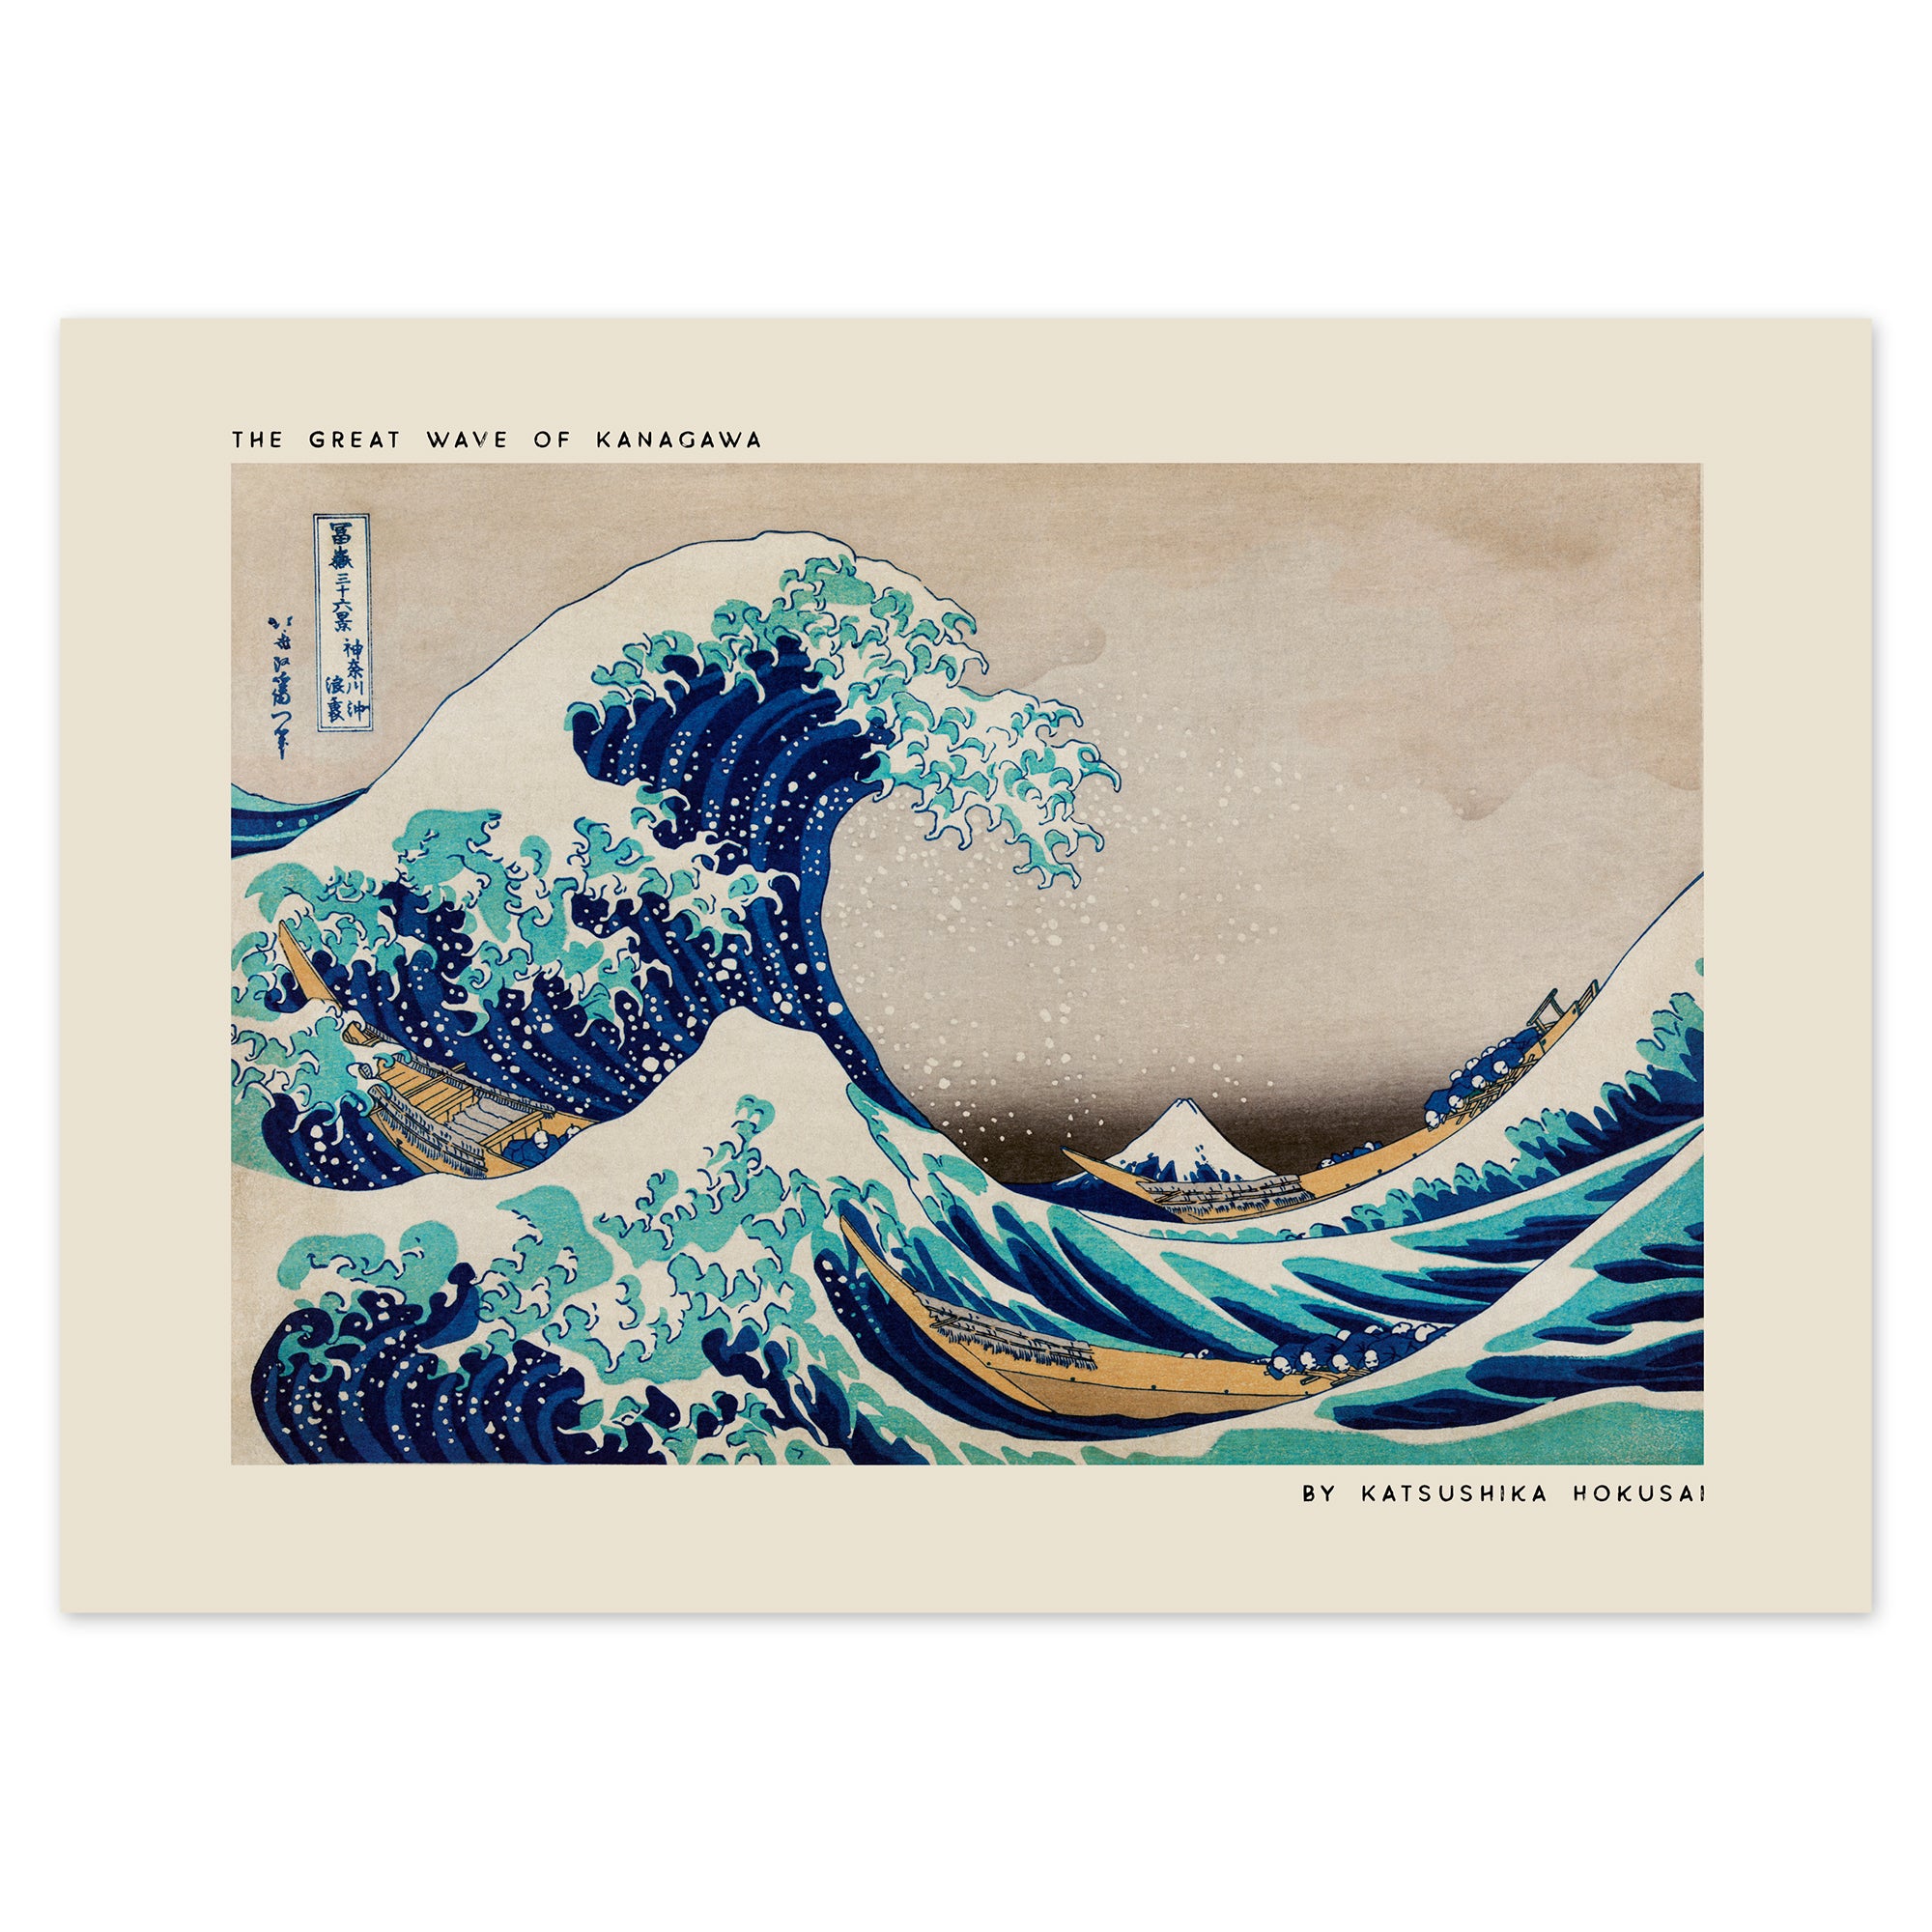 Katsushika Hokusai Poster - The Great Wave of Kanagawa